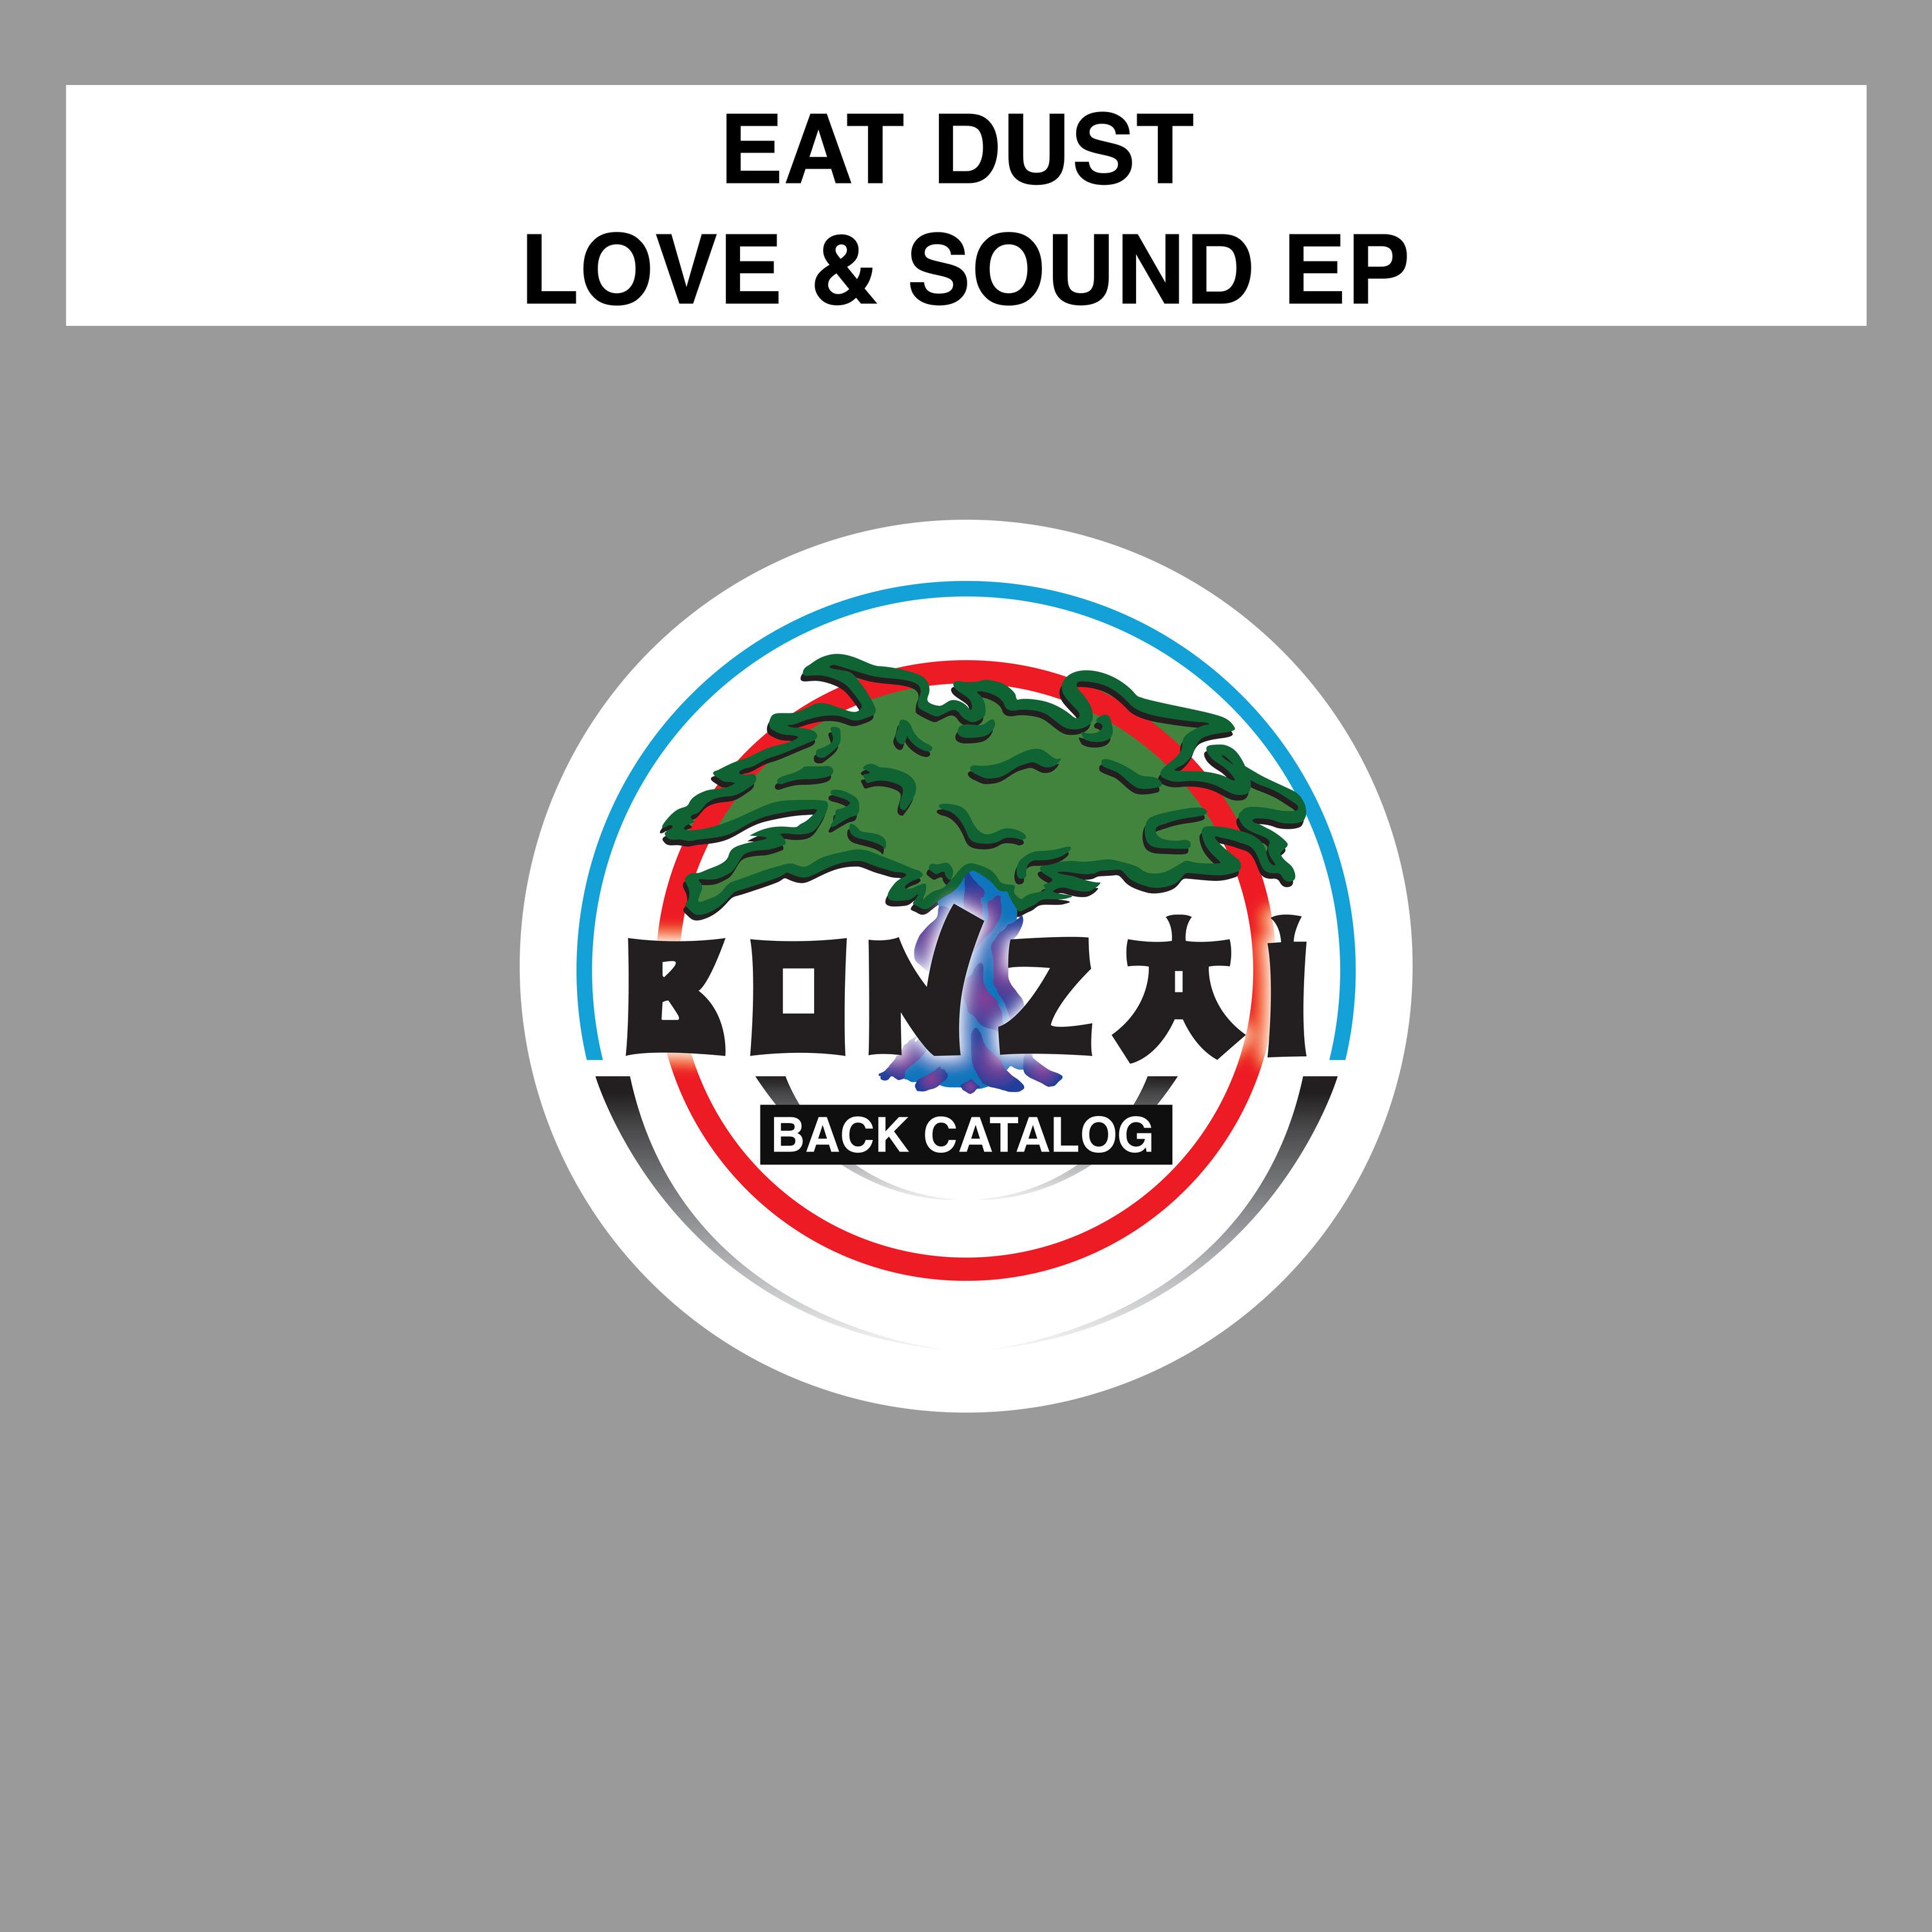 Love & Sound EP